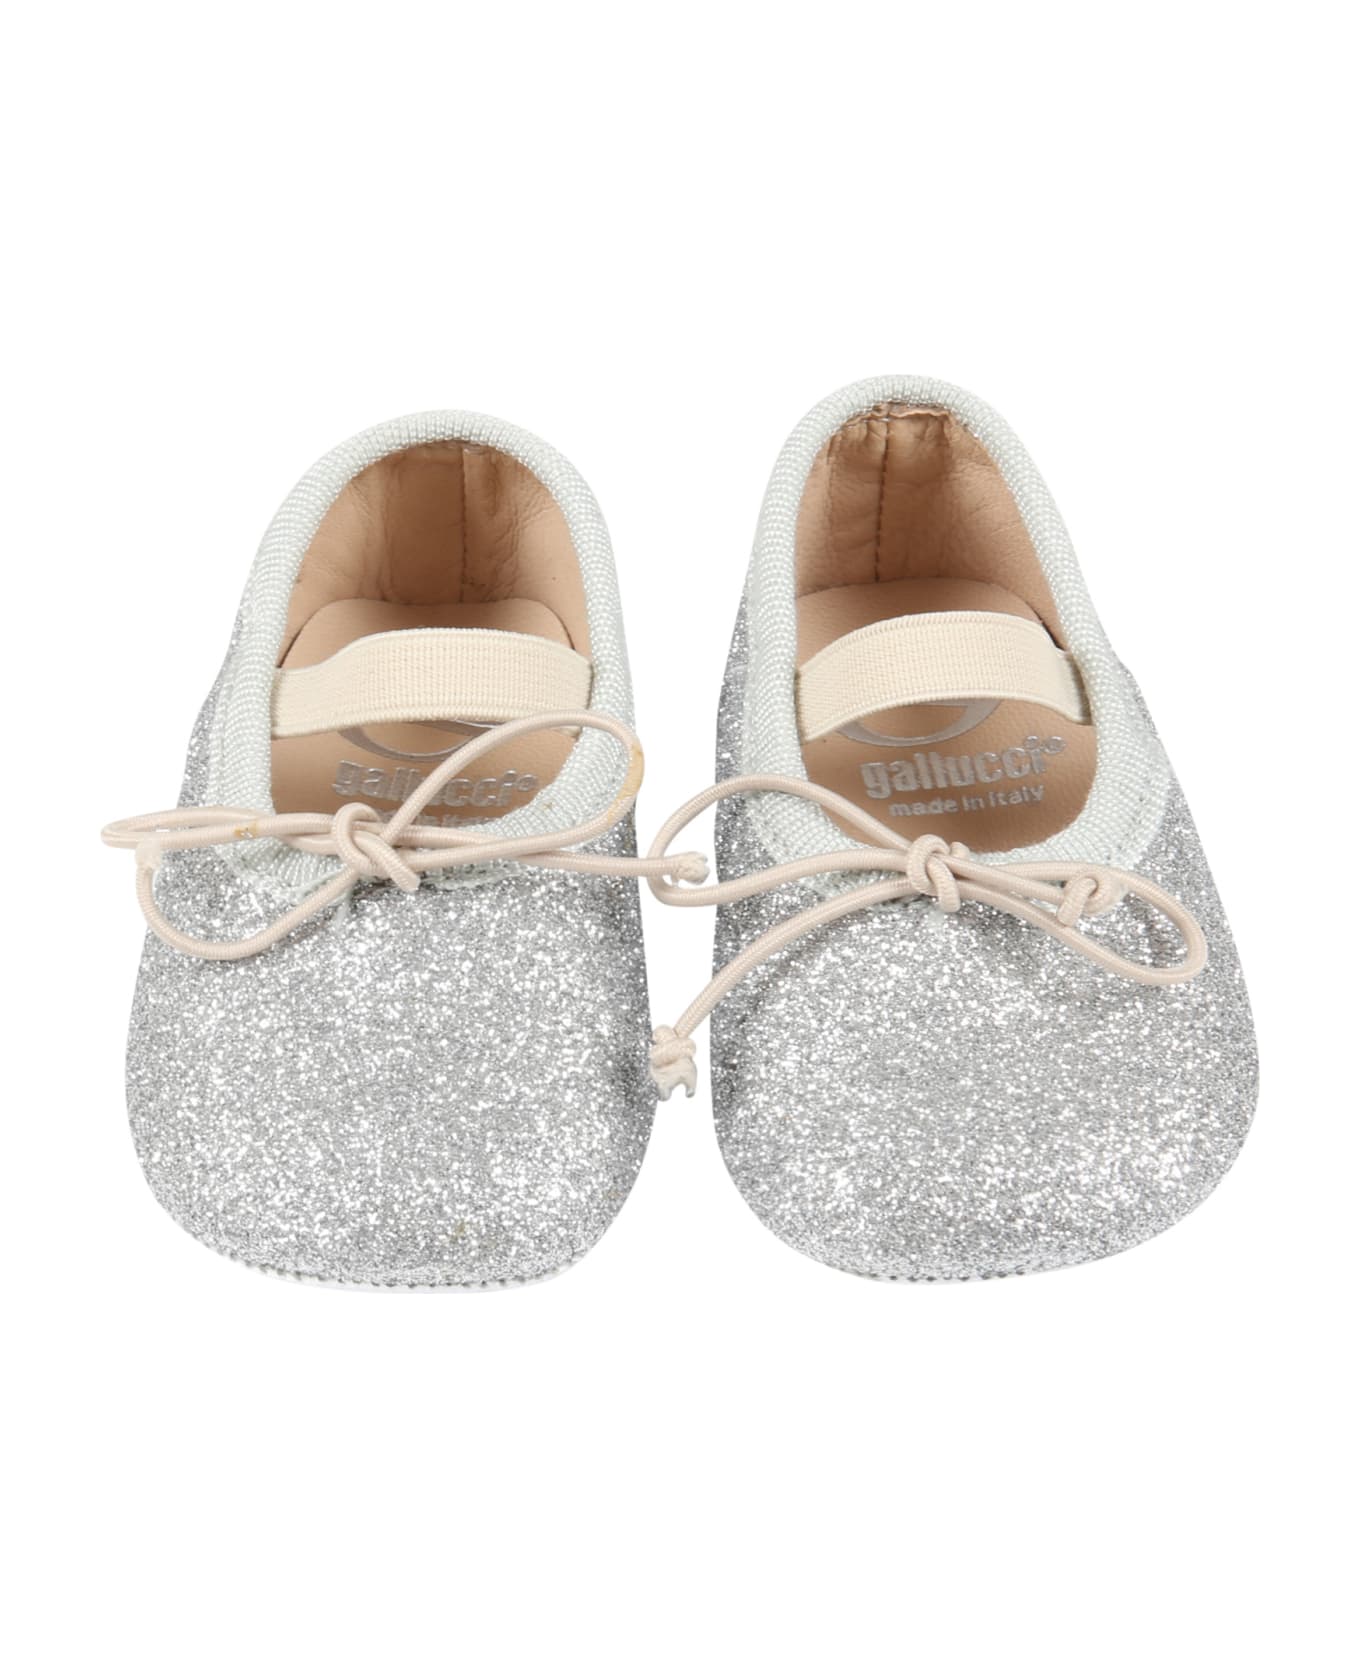 Gallucci Silver Ballet Flats For Baby Girl - Silver